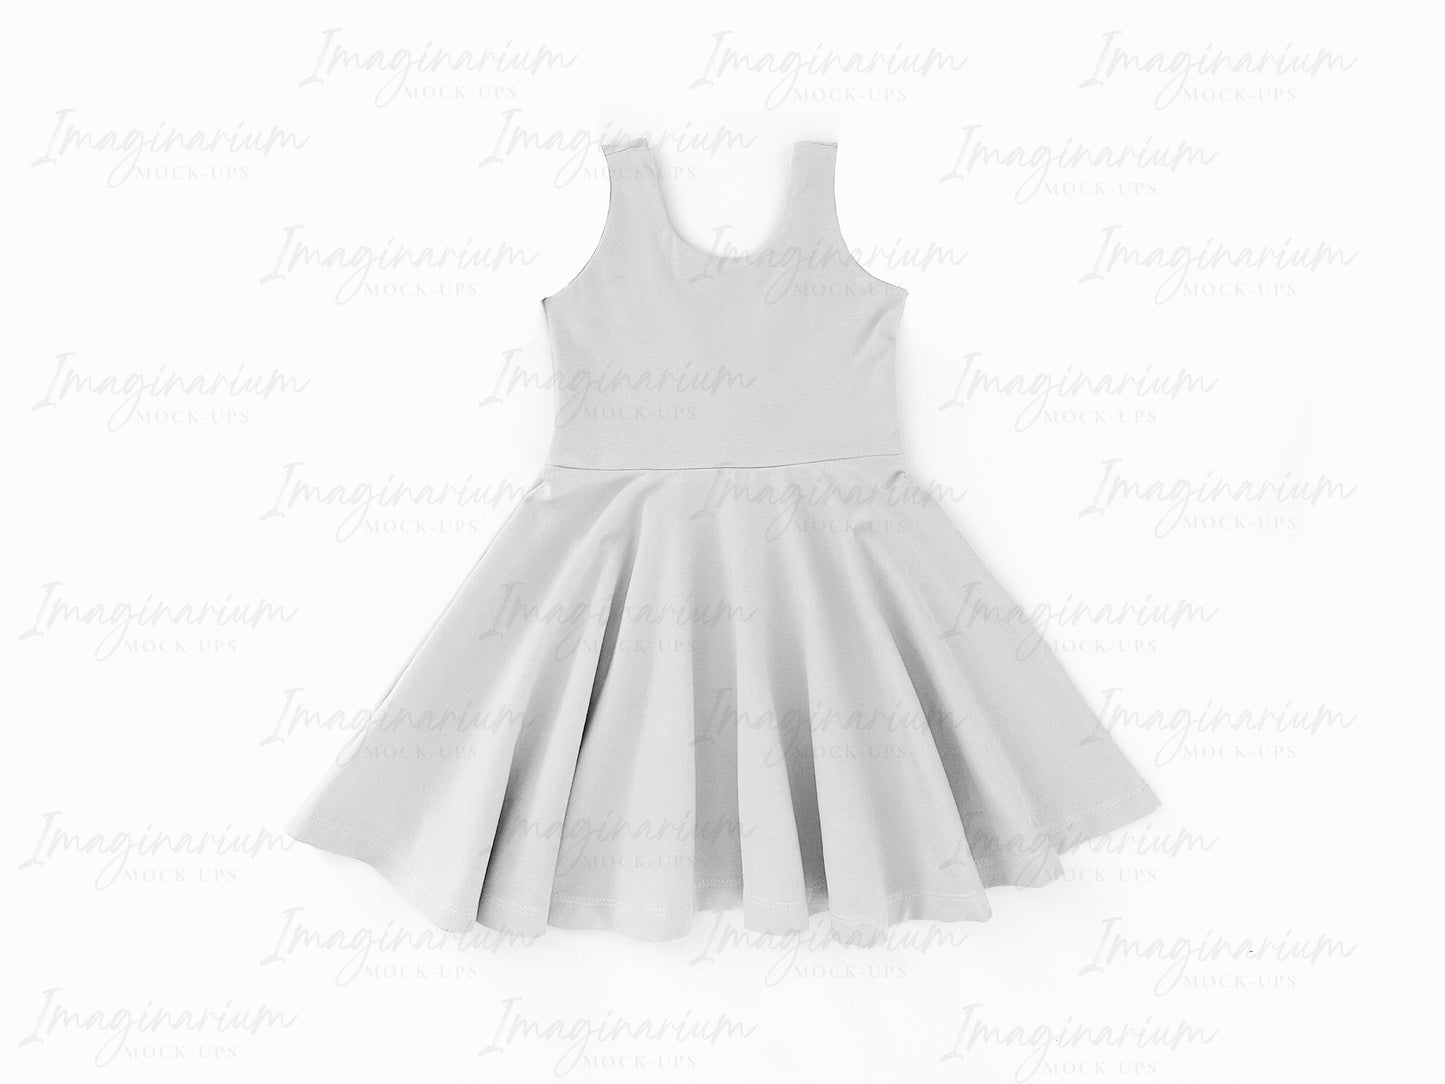 Sleeveless Circle Skirt Brielle Dress Mock Up, Realistic Clothing Mockup for Photoshop and Procreate